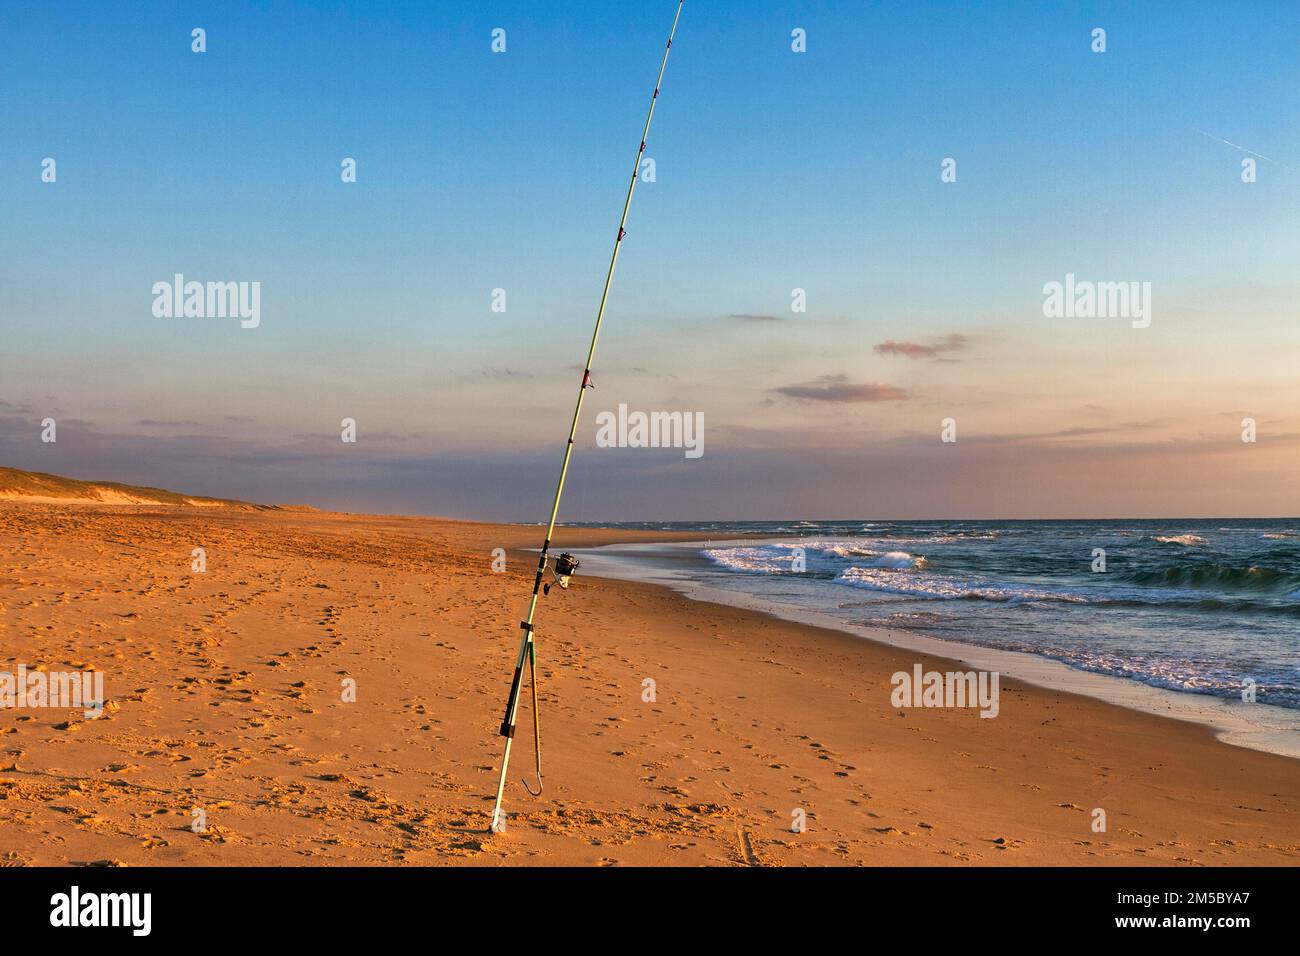 https://c8.alamy.com/comp/2M5BYA7/surf-fishing-fishing-rod-stands-on-the-beach-soustons-plage-evening-light-silver-coast-cote-dargent-atlantic-ocean-soustons-landes-2M5BYA7.jpg